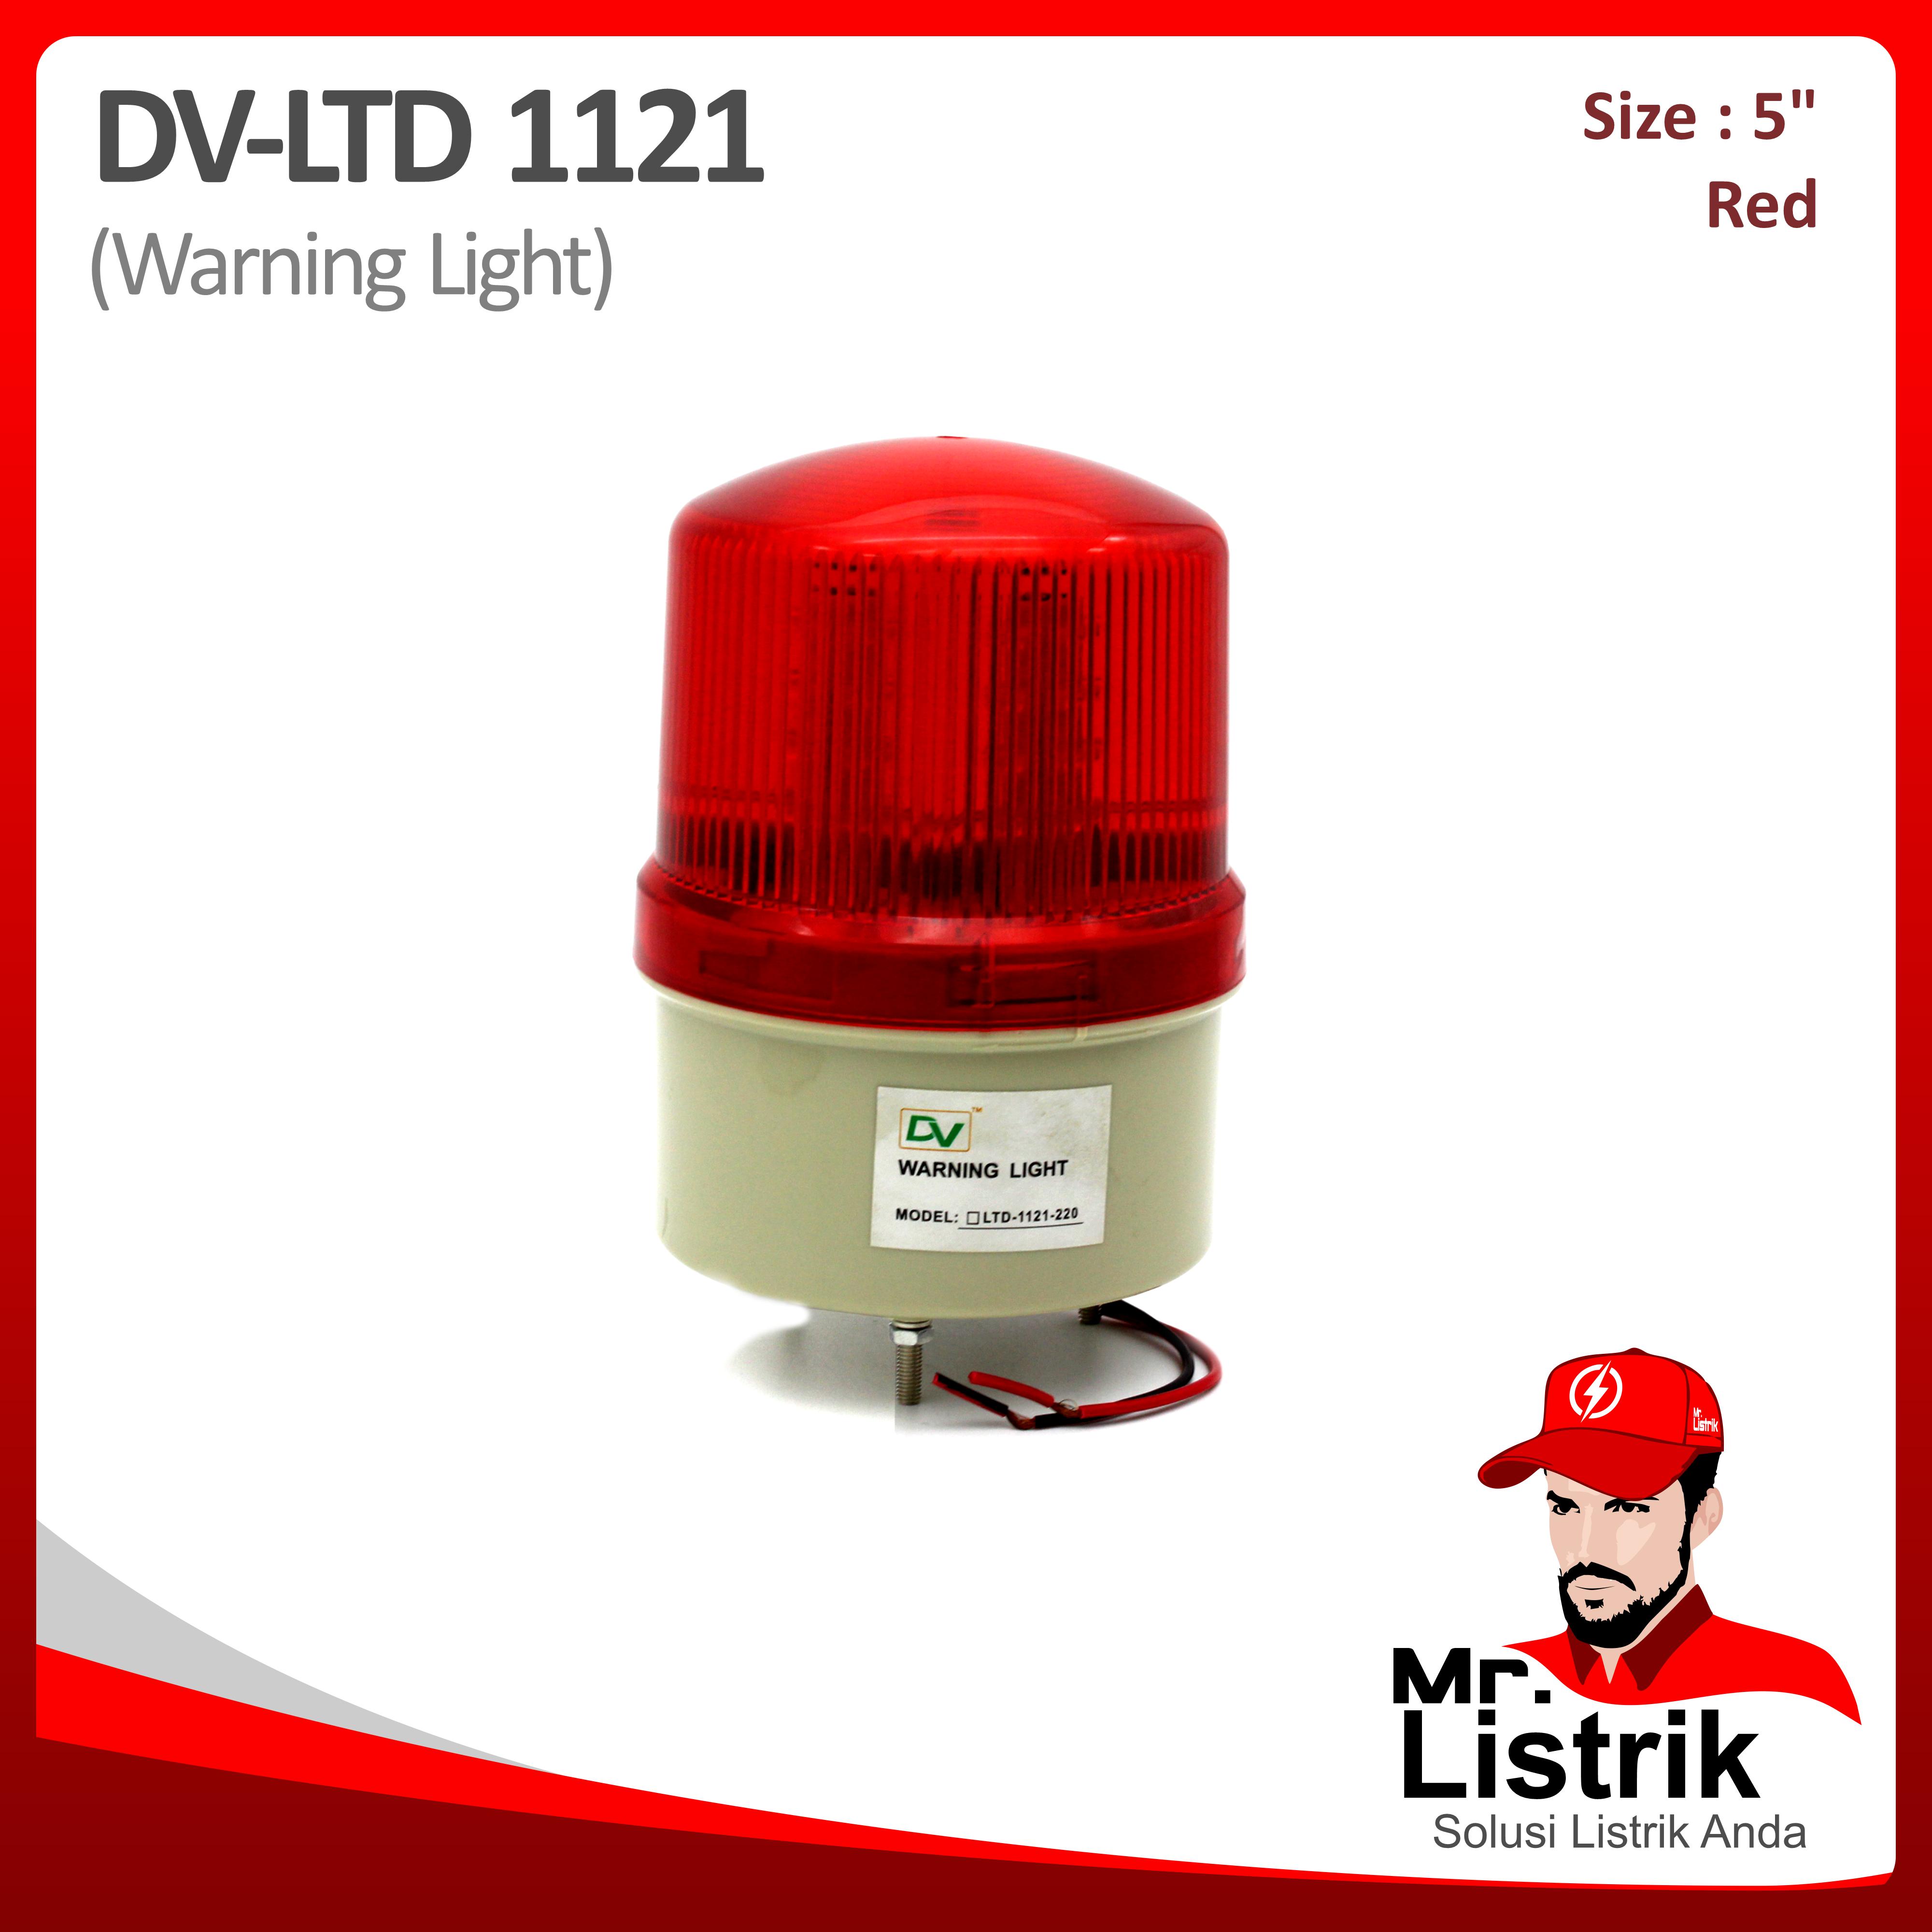 Warning Light LED Rotary 5 Inch 220VAC DV LTD-1121